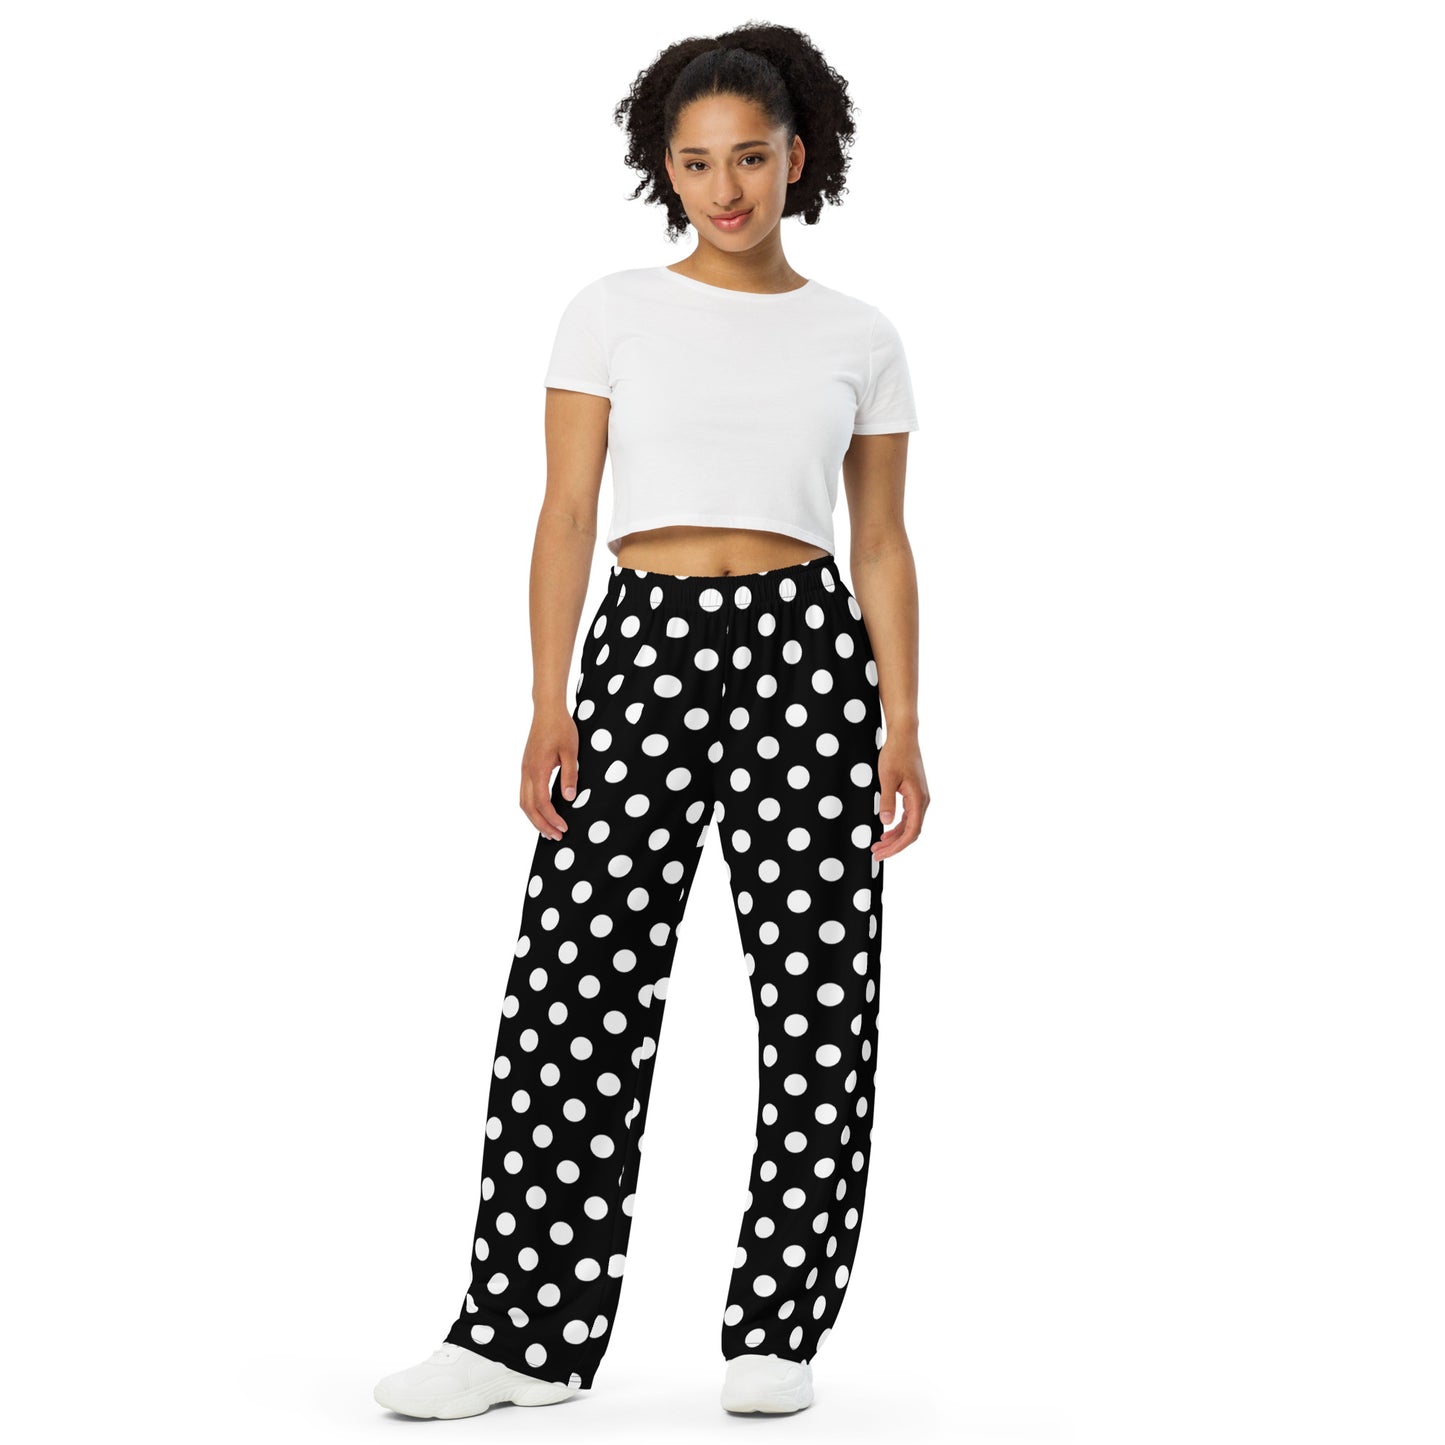 Polka Dots Lounge Pants with Pockets, Black White Unisex Men Women Wide Leg Sweatpants PJ Pajamas Comfy Plus Size Drawstring Yoga